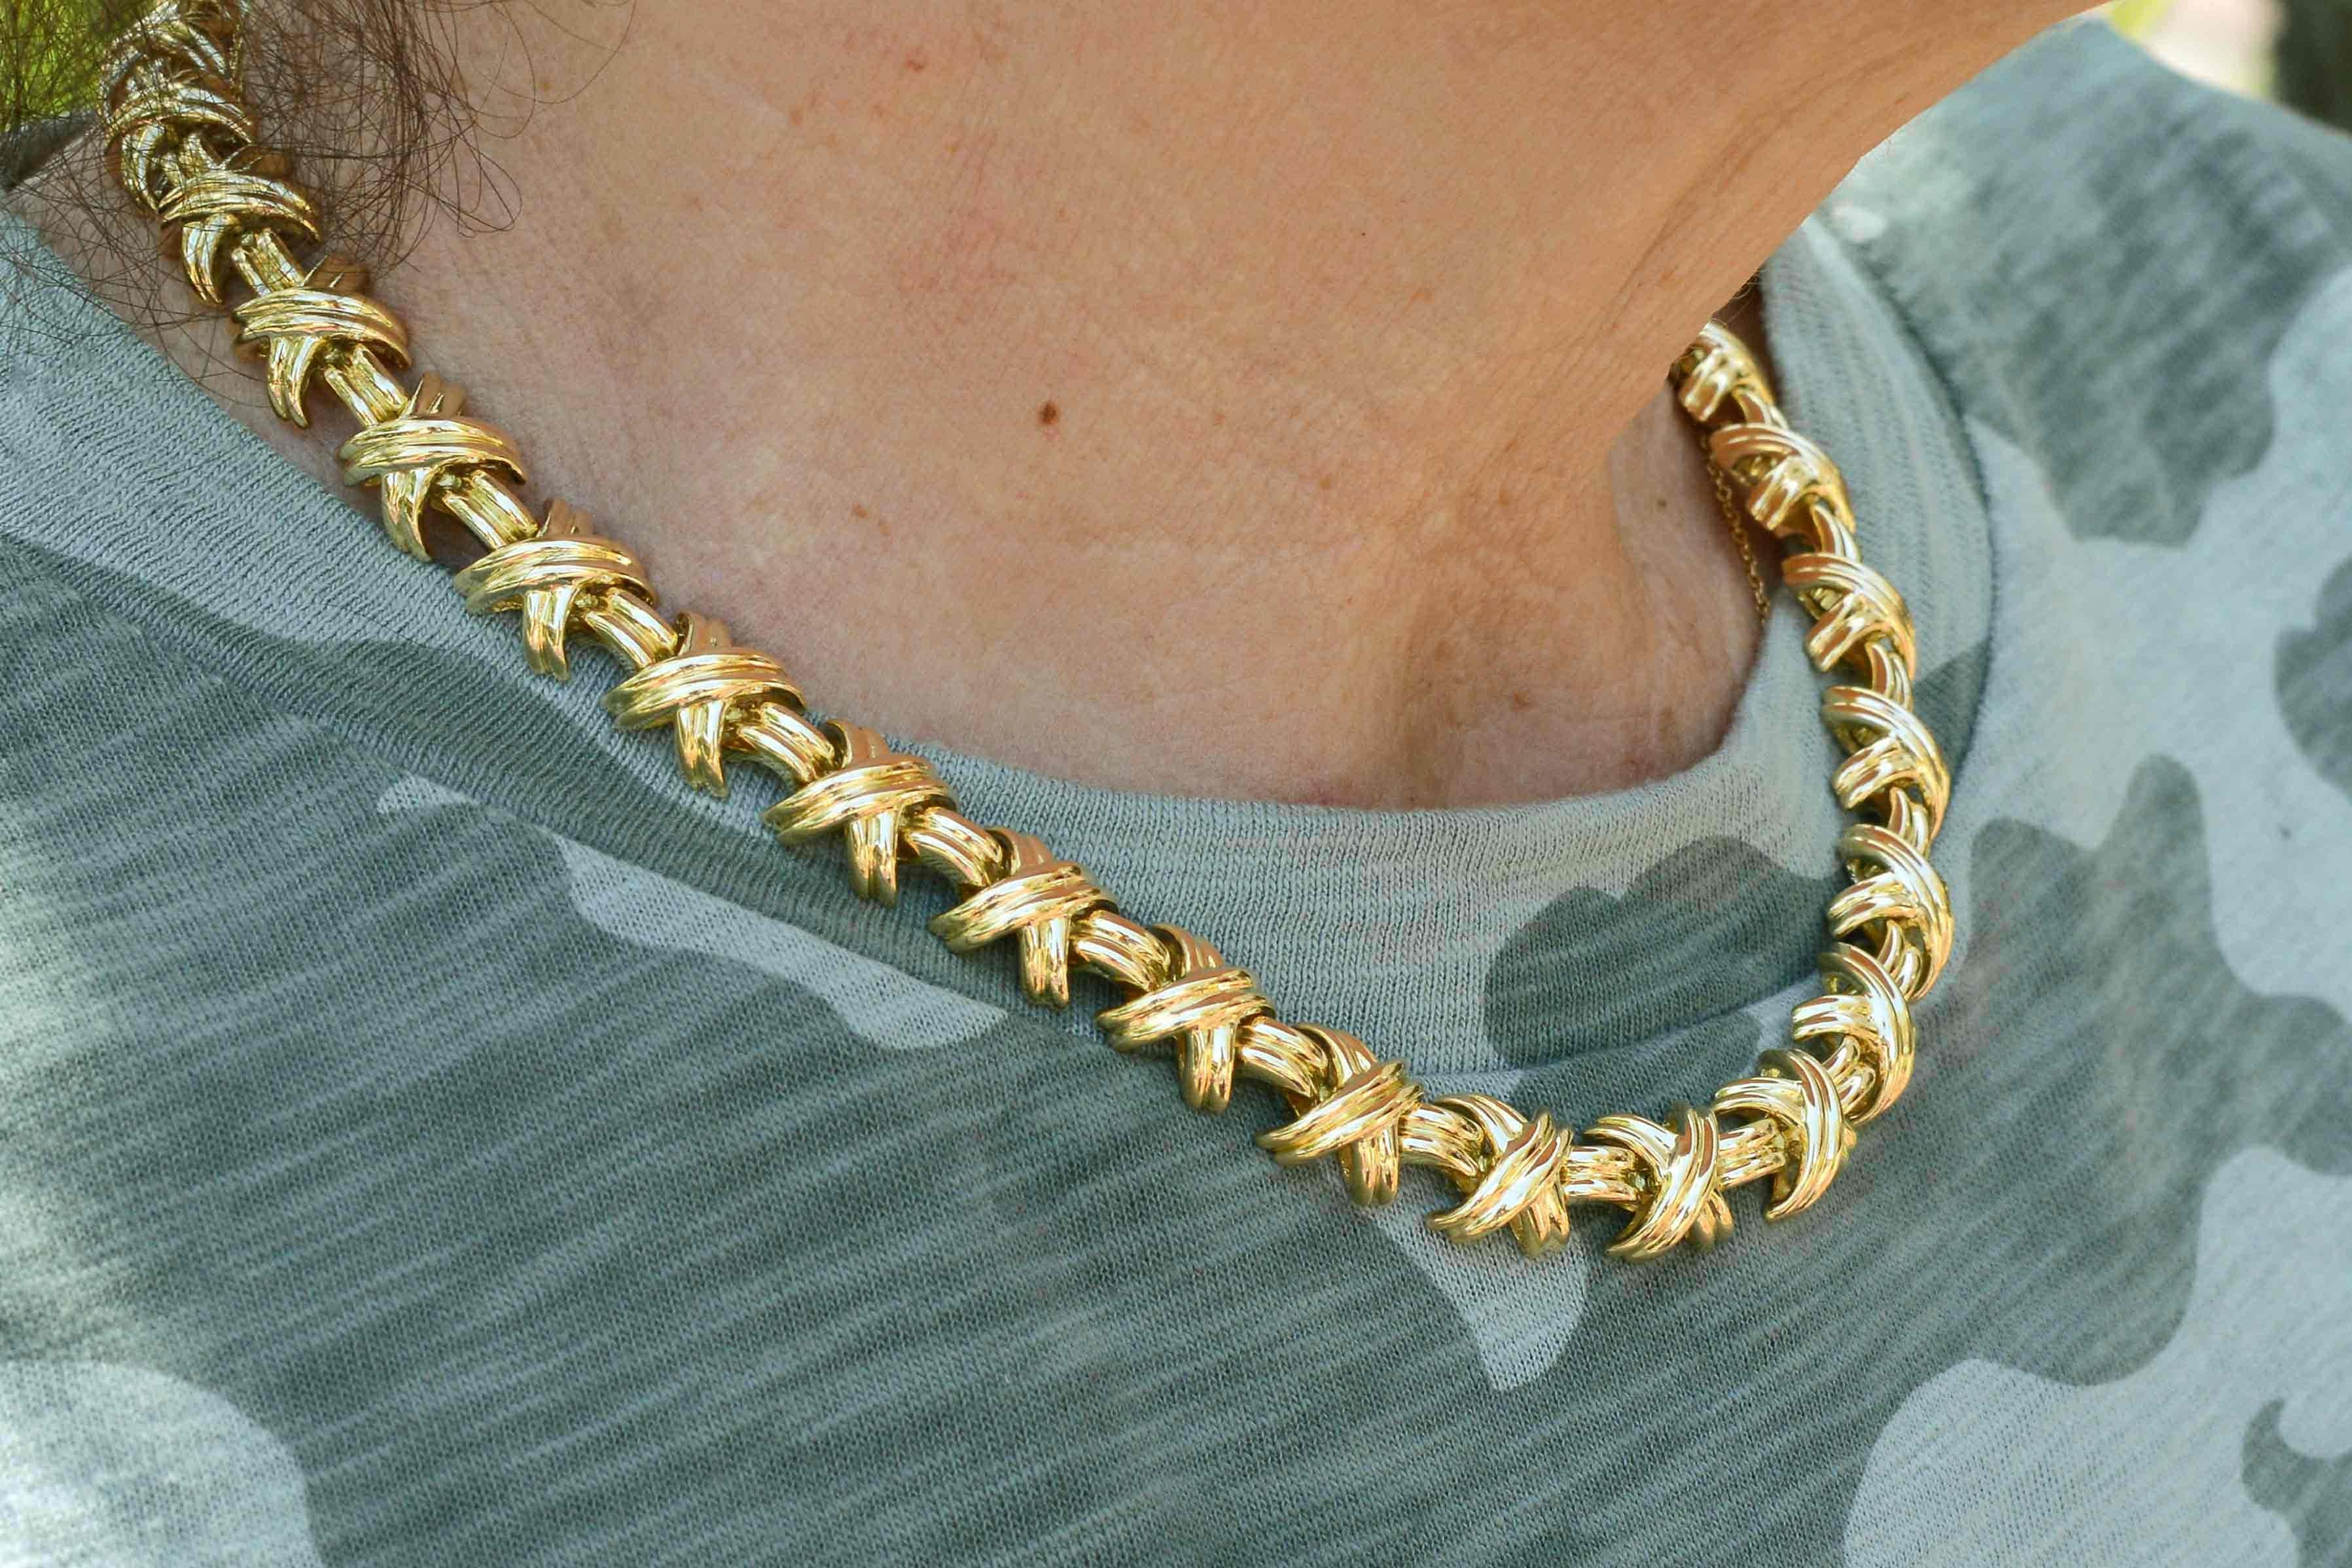 3oz gold chain